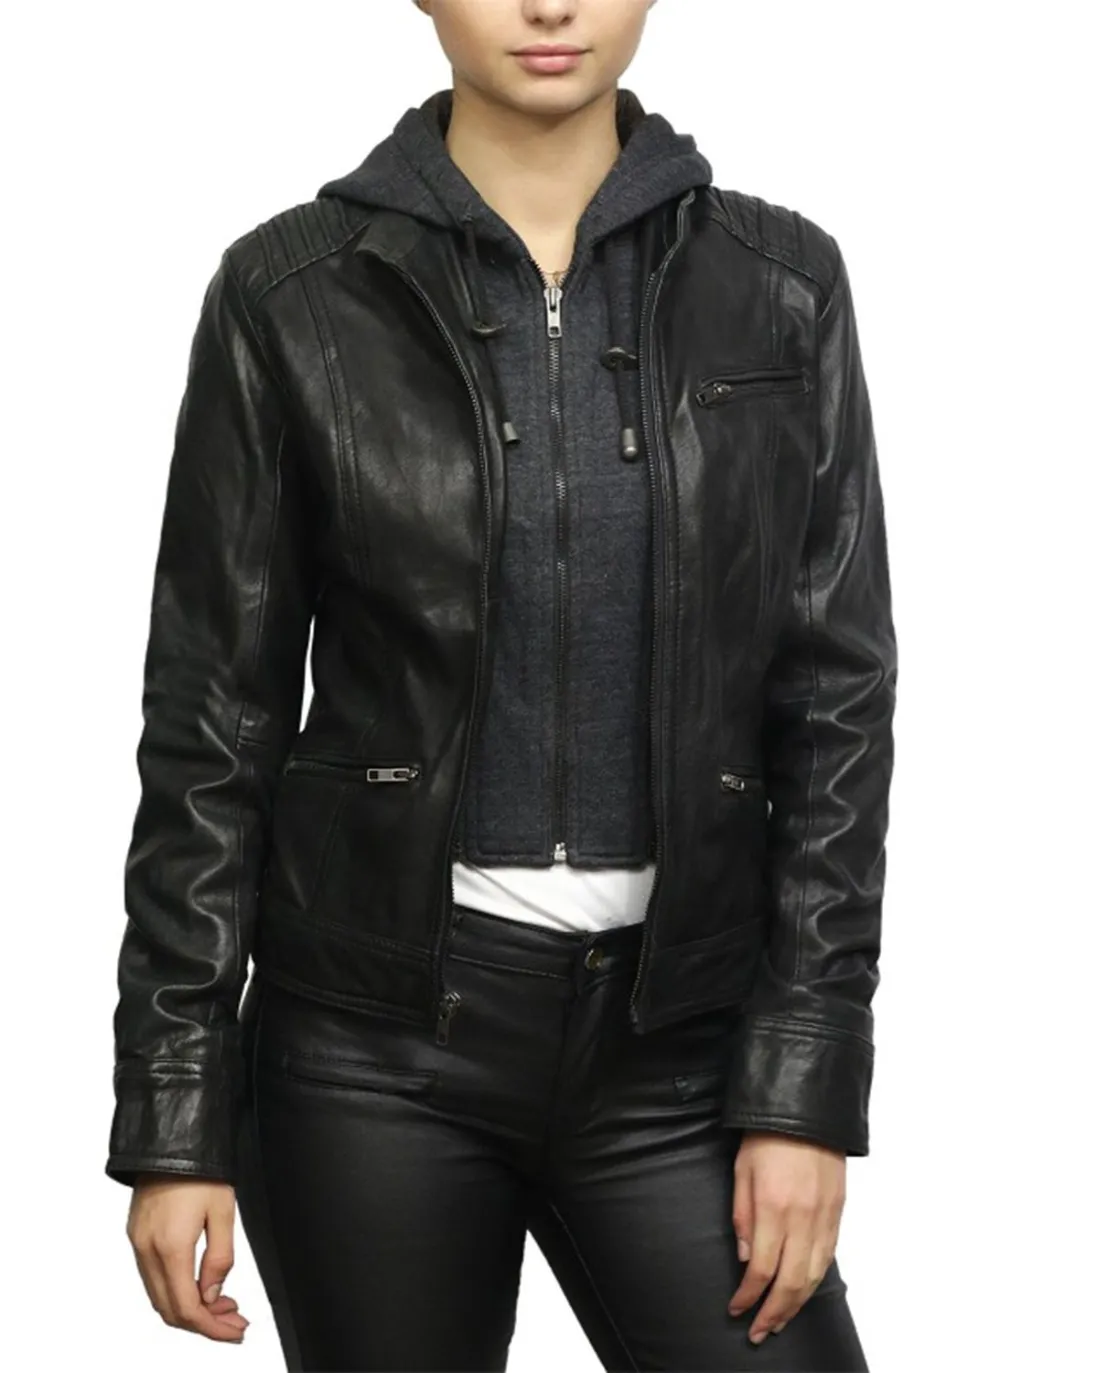 Womens Black and Brown Slim Fit Leather Jacket With Hoodie